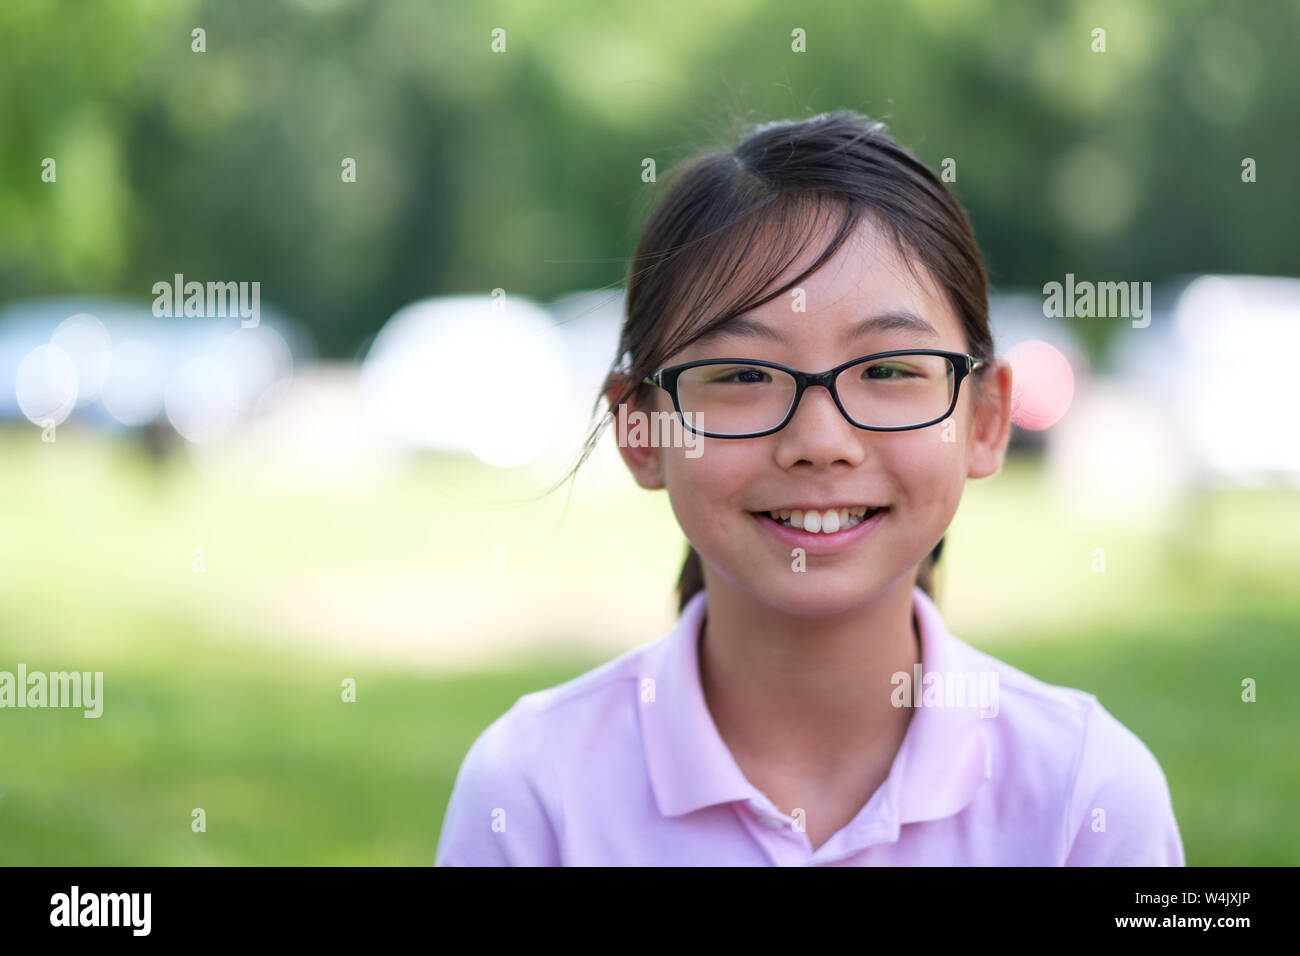 Asian girl portrait smiling in park Stock Photo